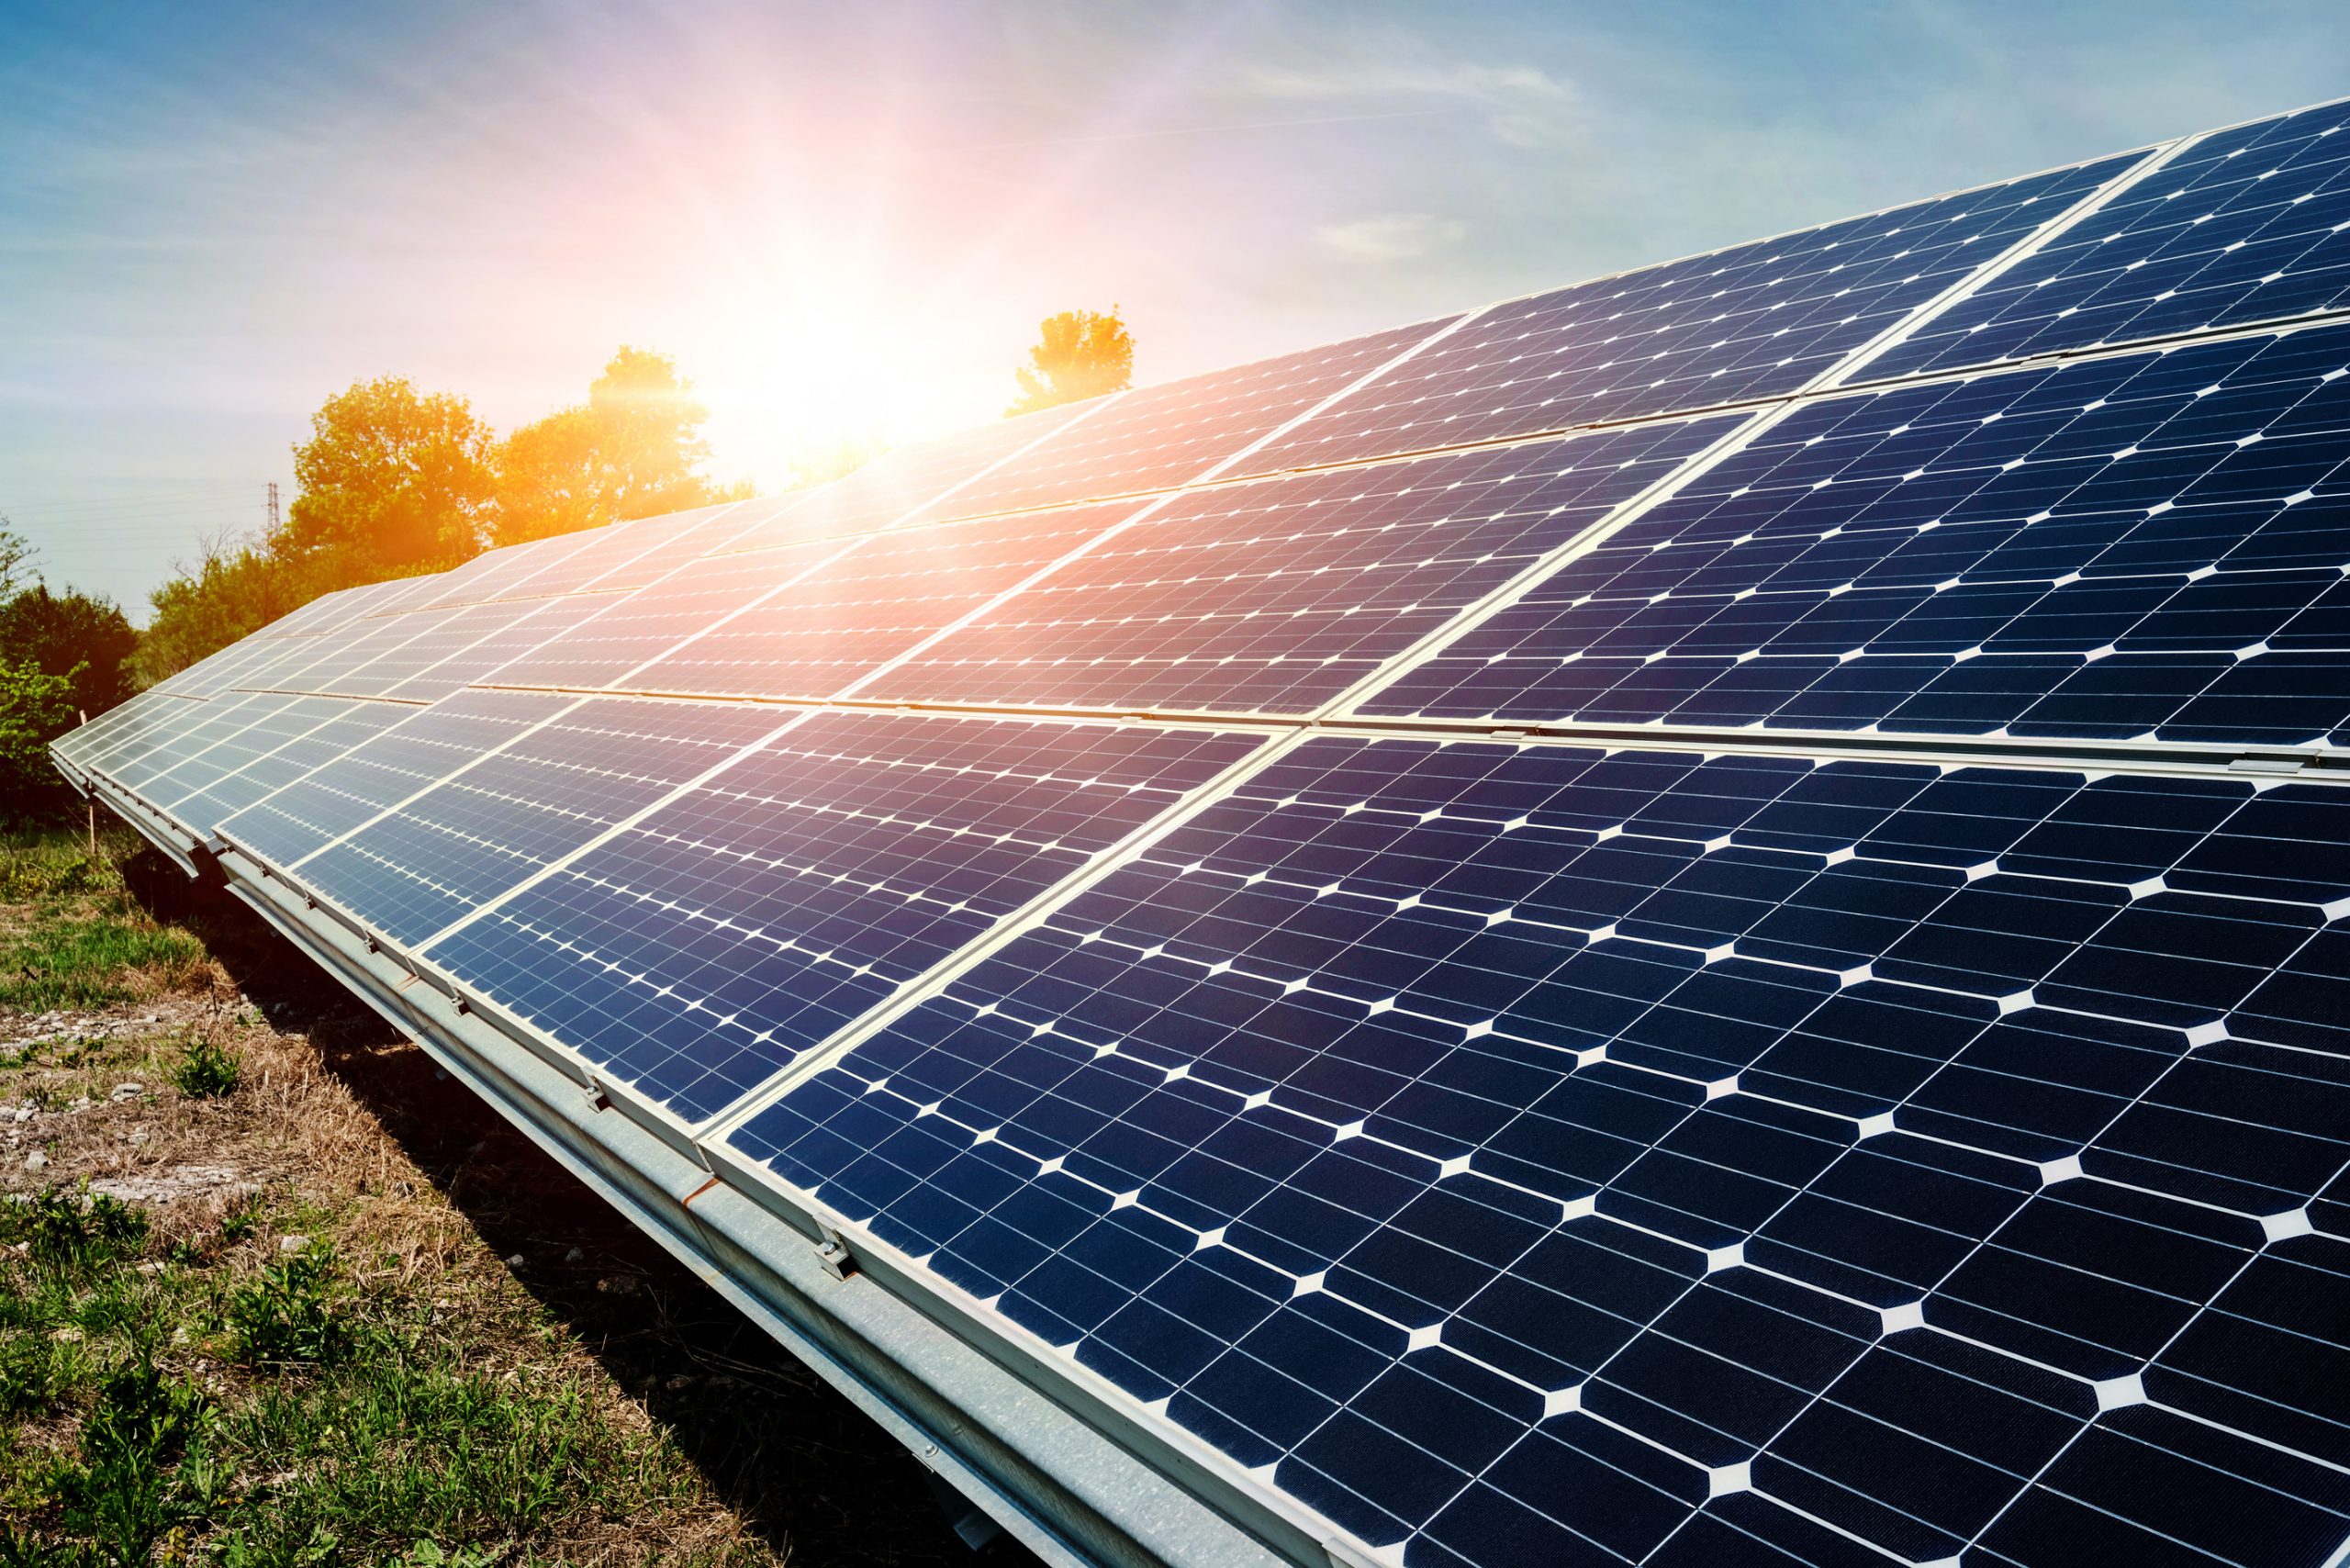 Solar Panels in Sunlight for Power Generation